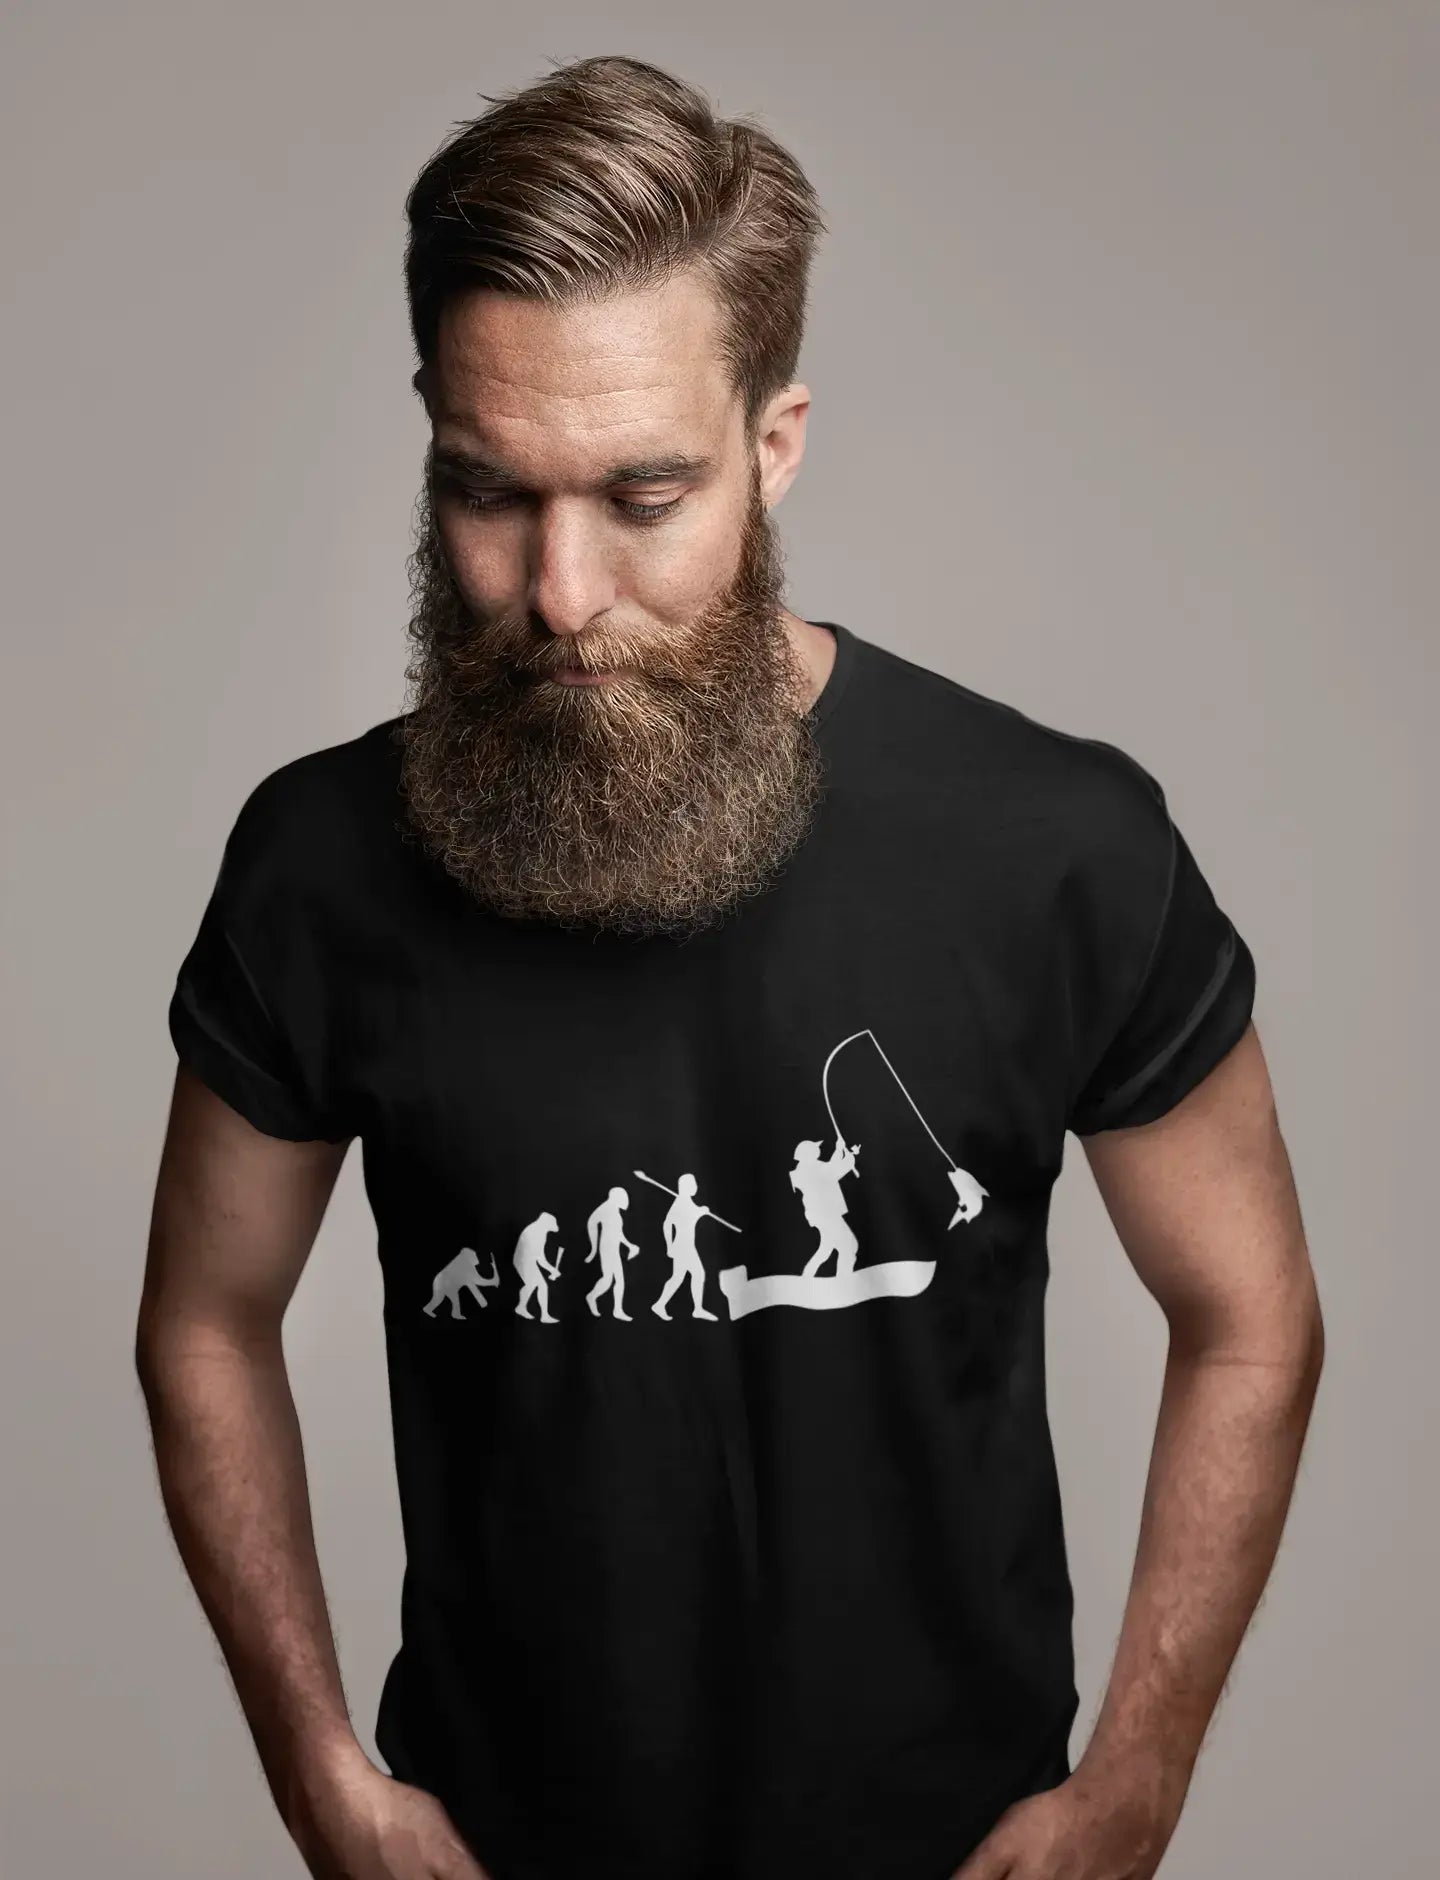 ULTRABASIC - Graphic Printed Men's Evolution of the Fishing Boat T-Shirt White